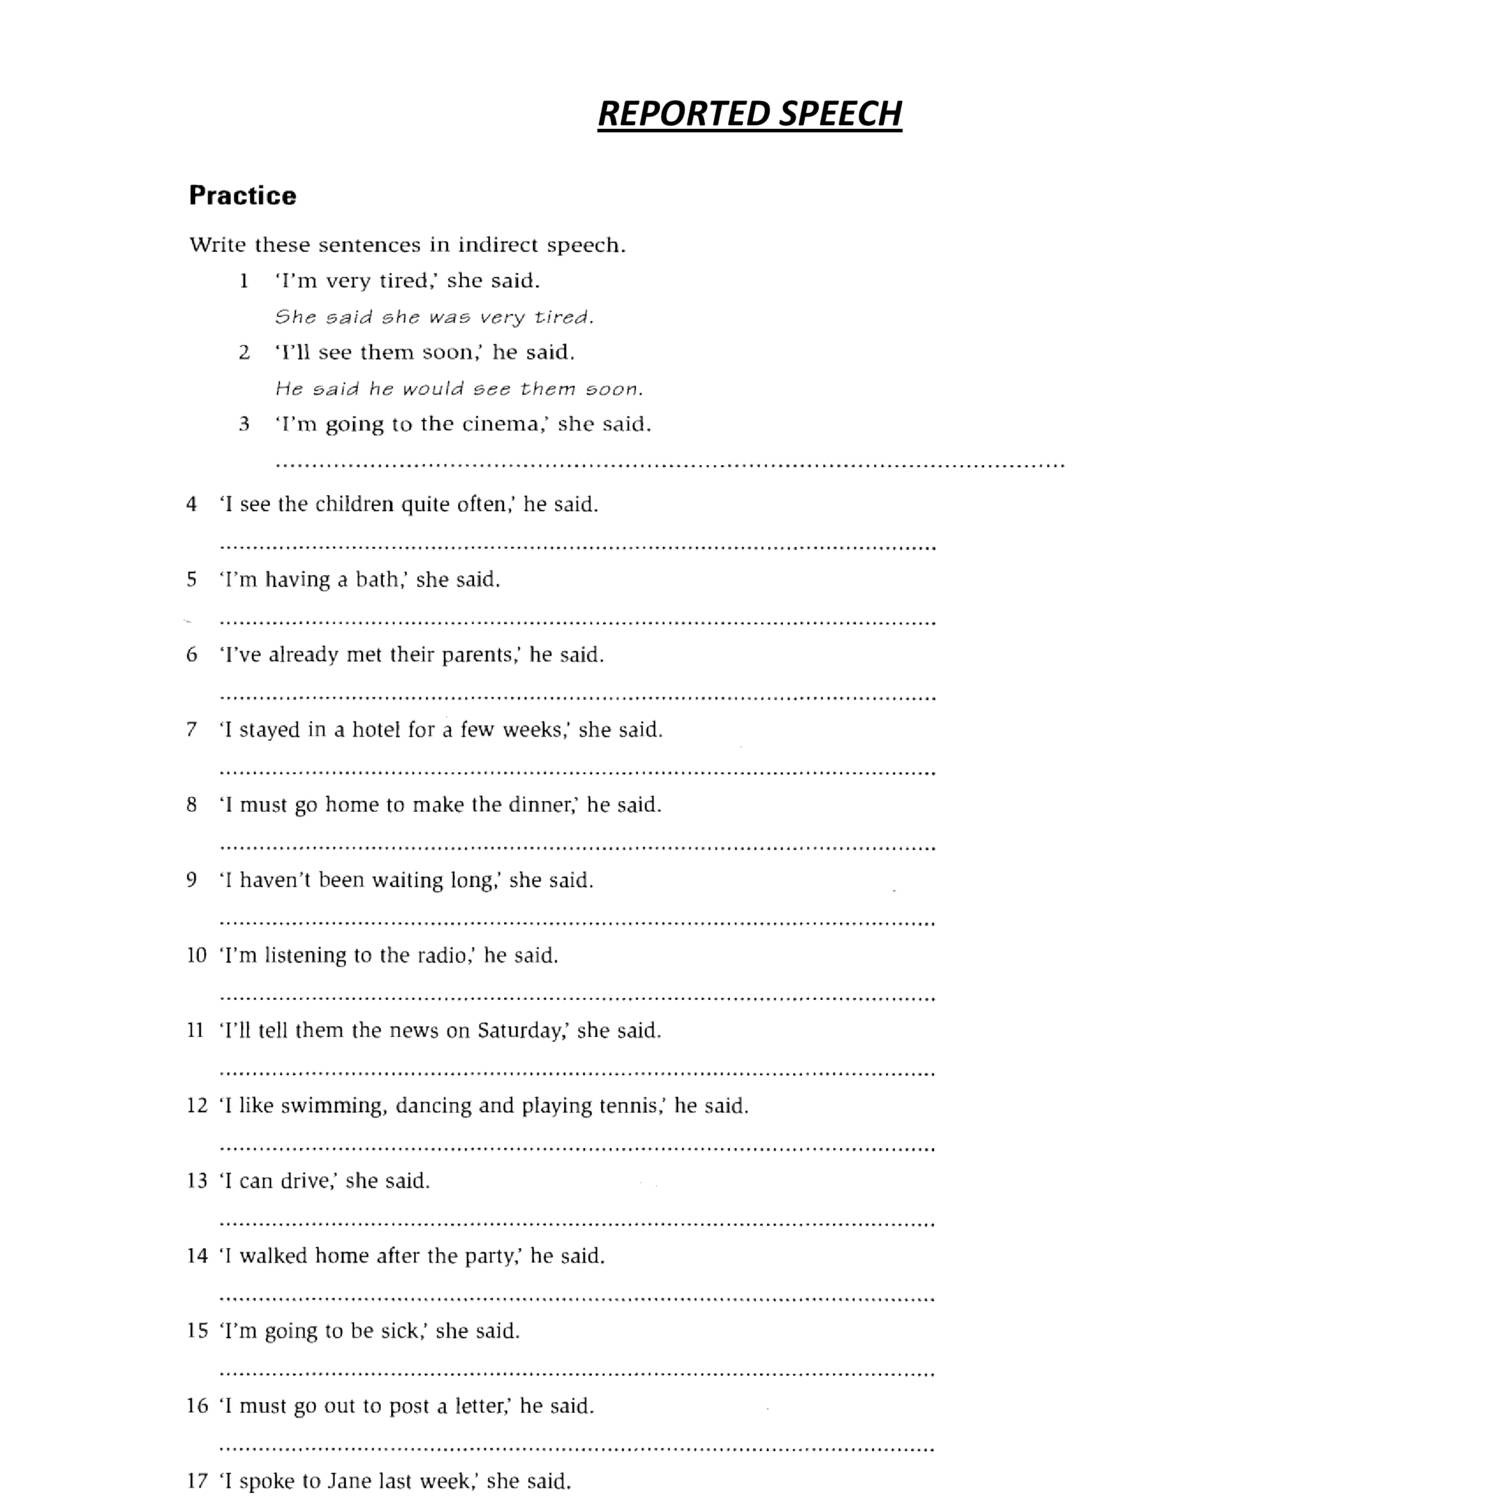 reported speech into direct speech exercises pdf